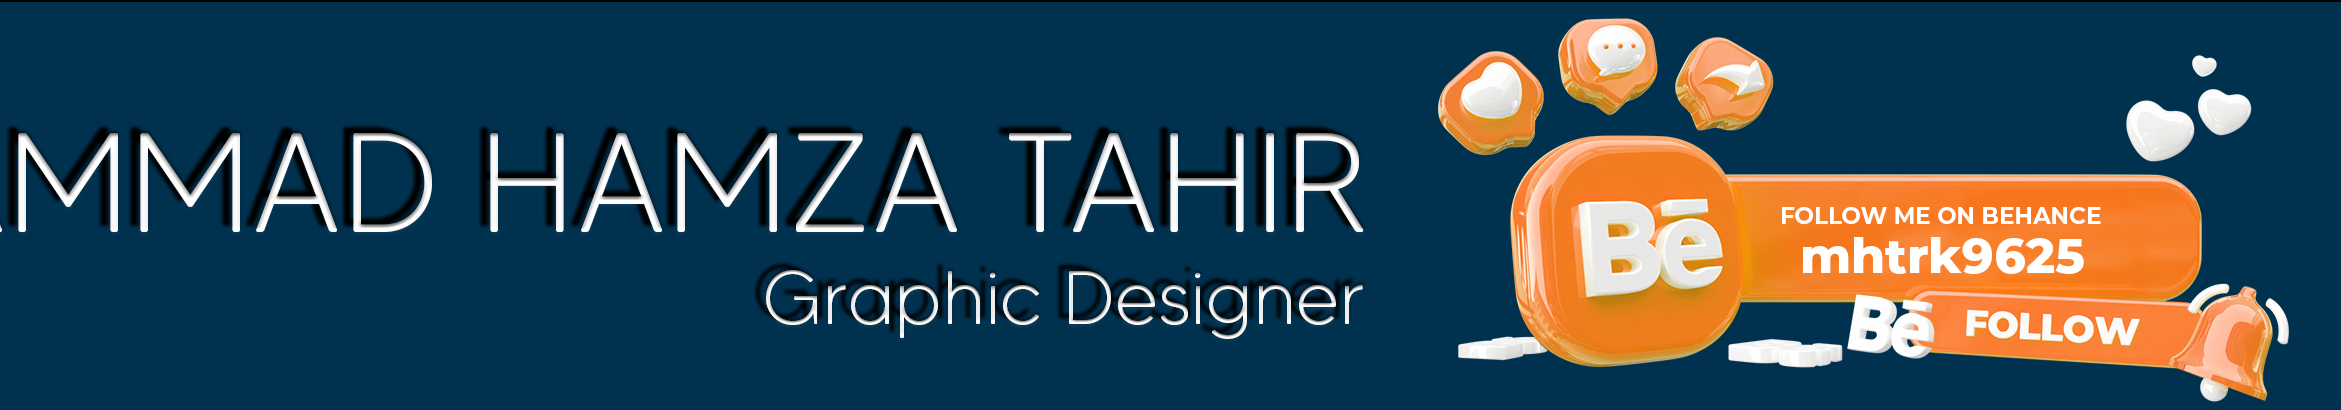 Muhammad Hamza Tahir's profile banner